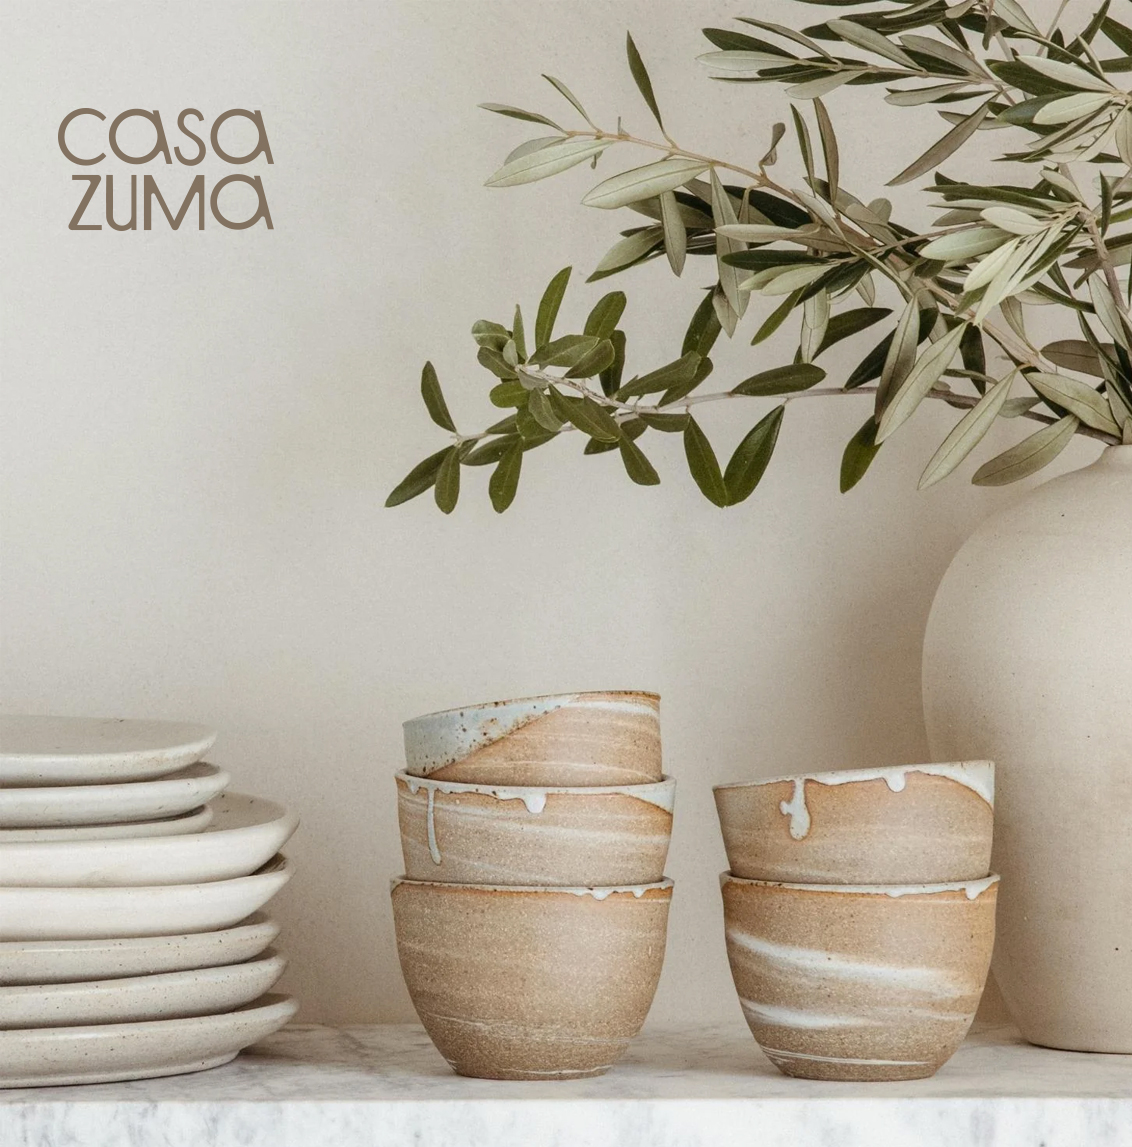 Casa Zuma by Camille Styles